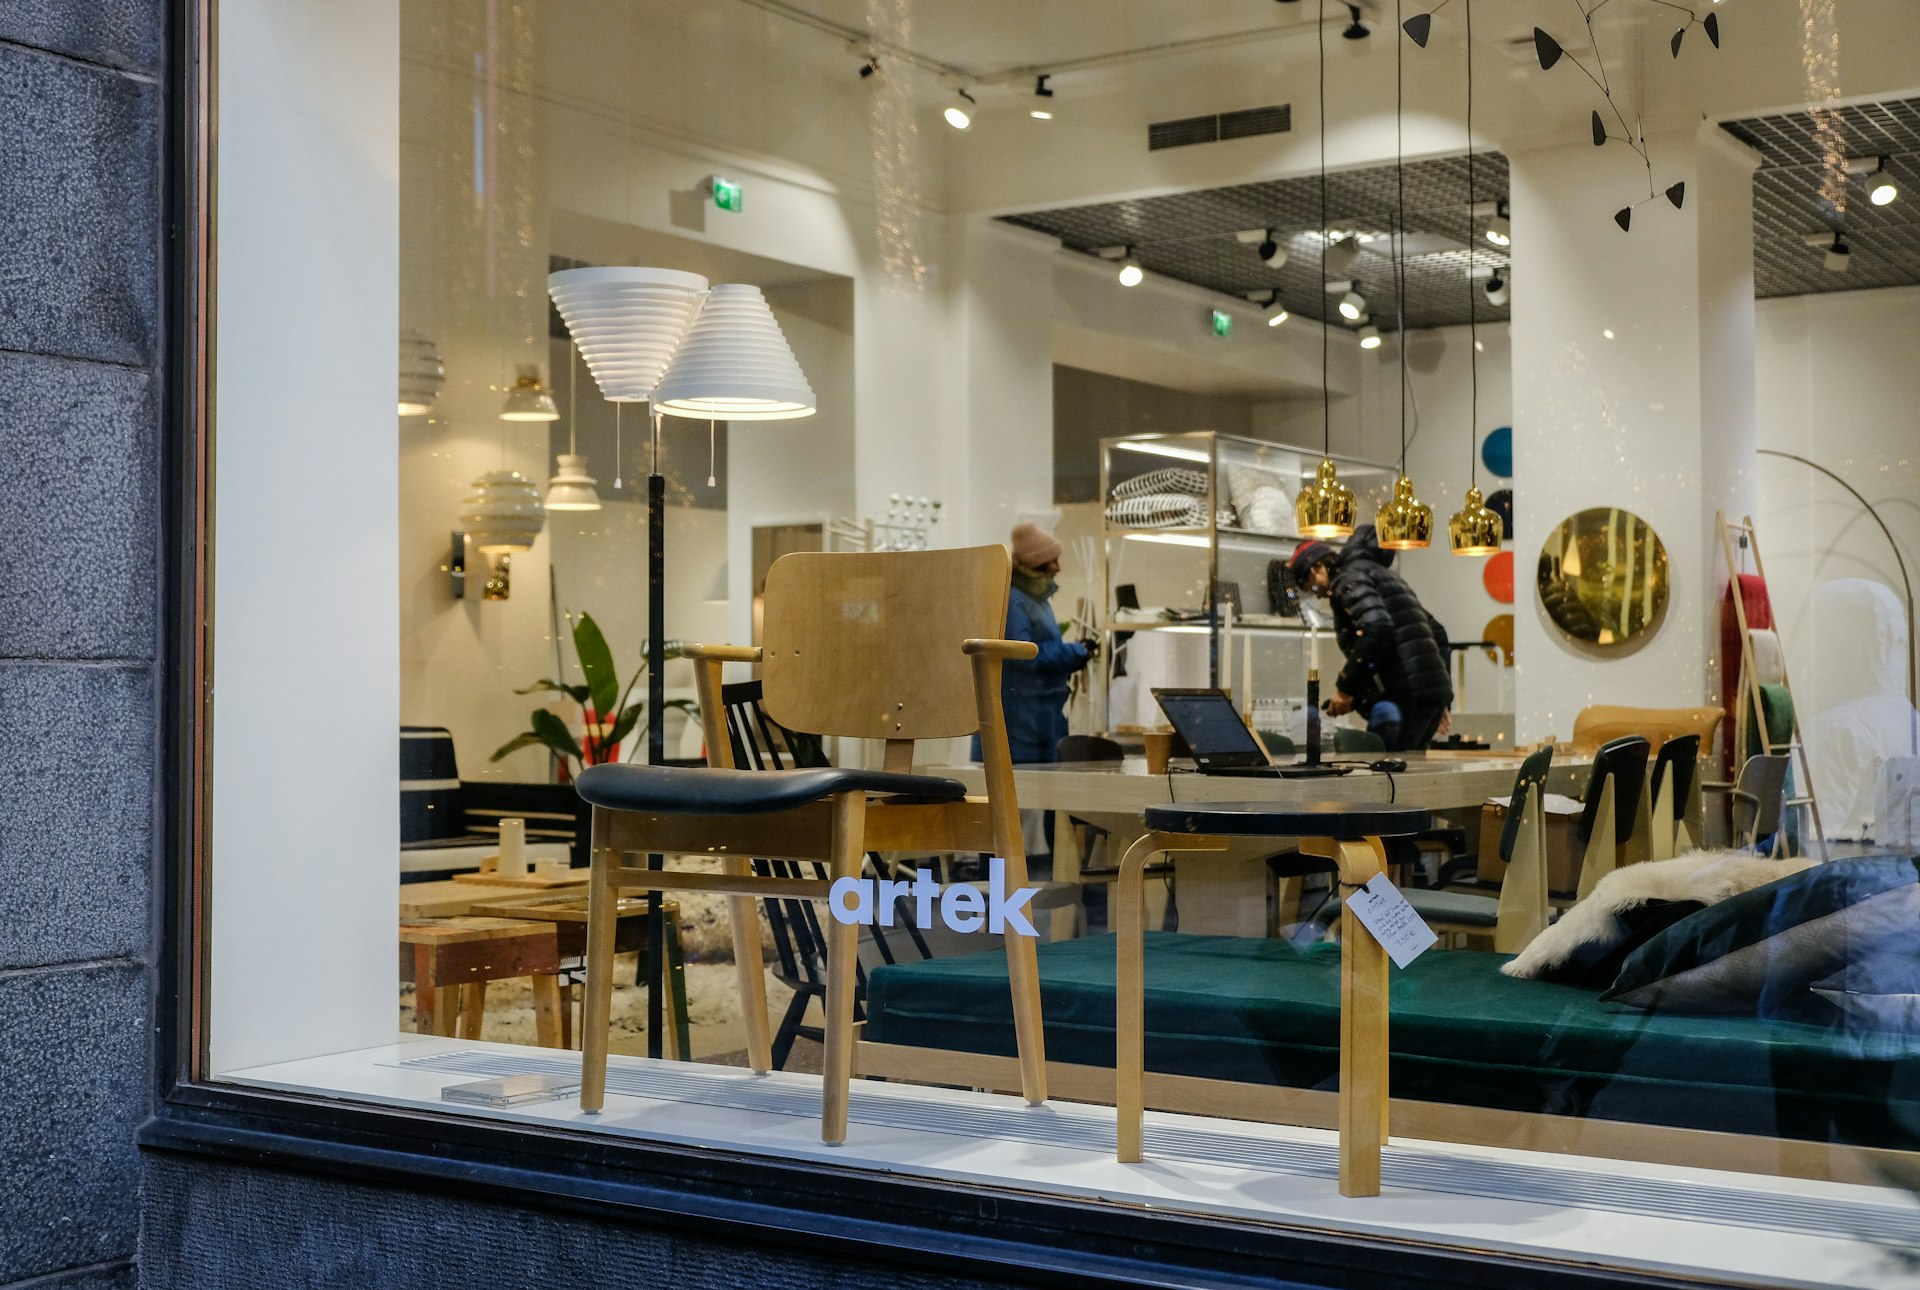 Customers seen through the Artek store window browsing - Helsinki, Finland